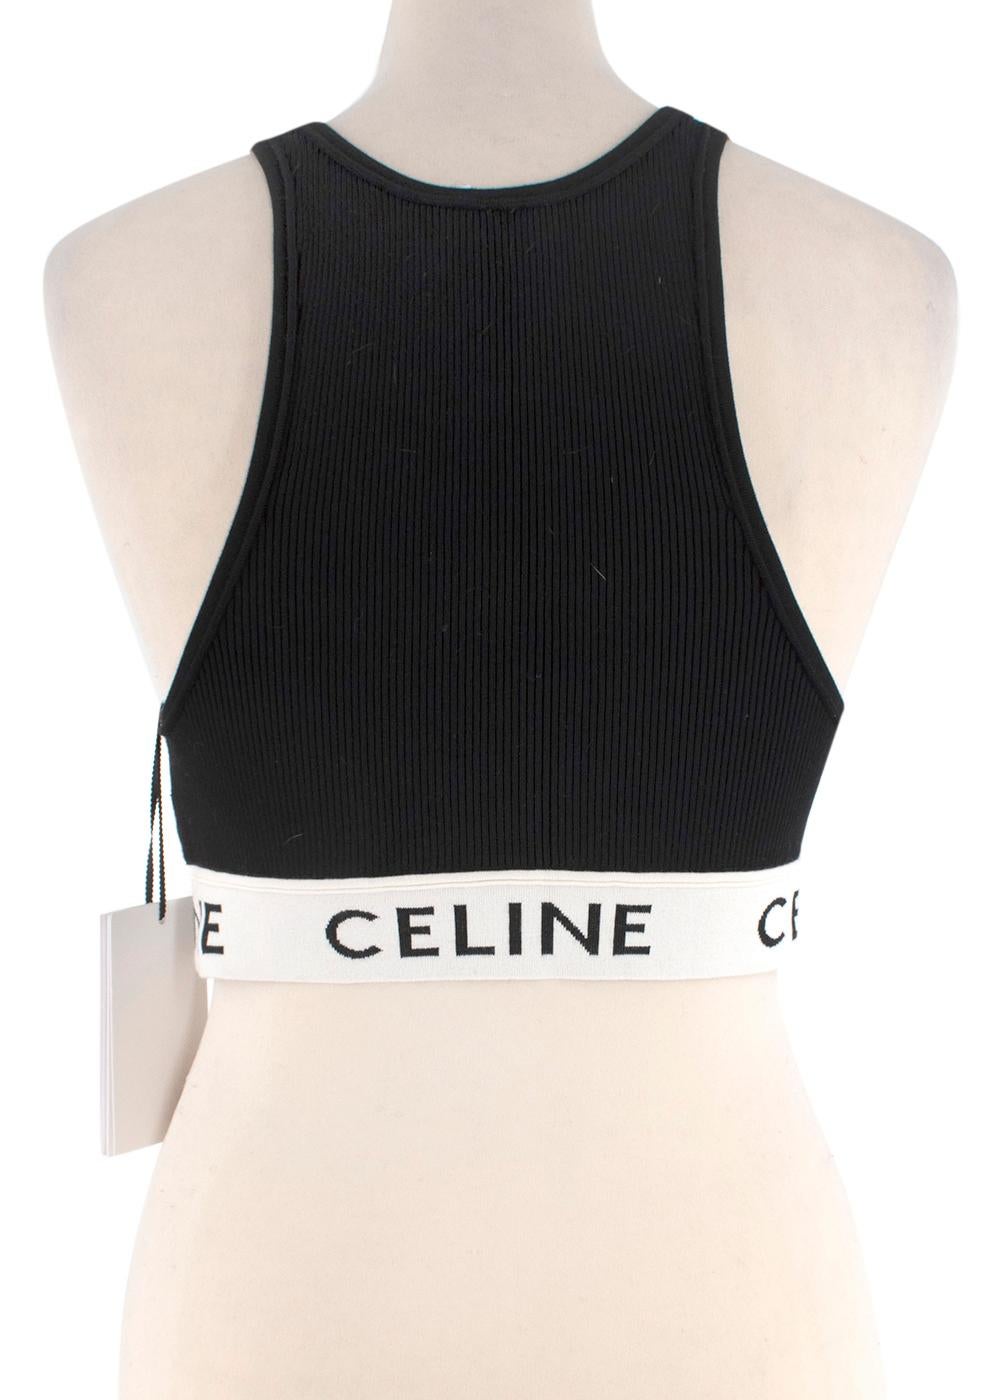 Celine Athletic Cotton Knit Black Sports Bra - Size M Sold Out - Us size 8 For Sale 3